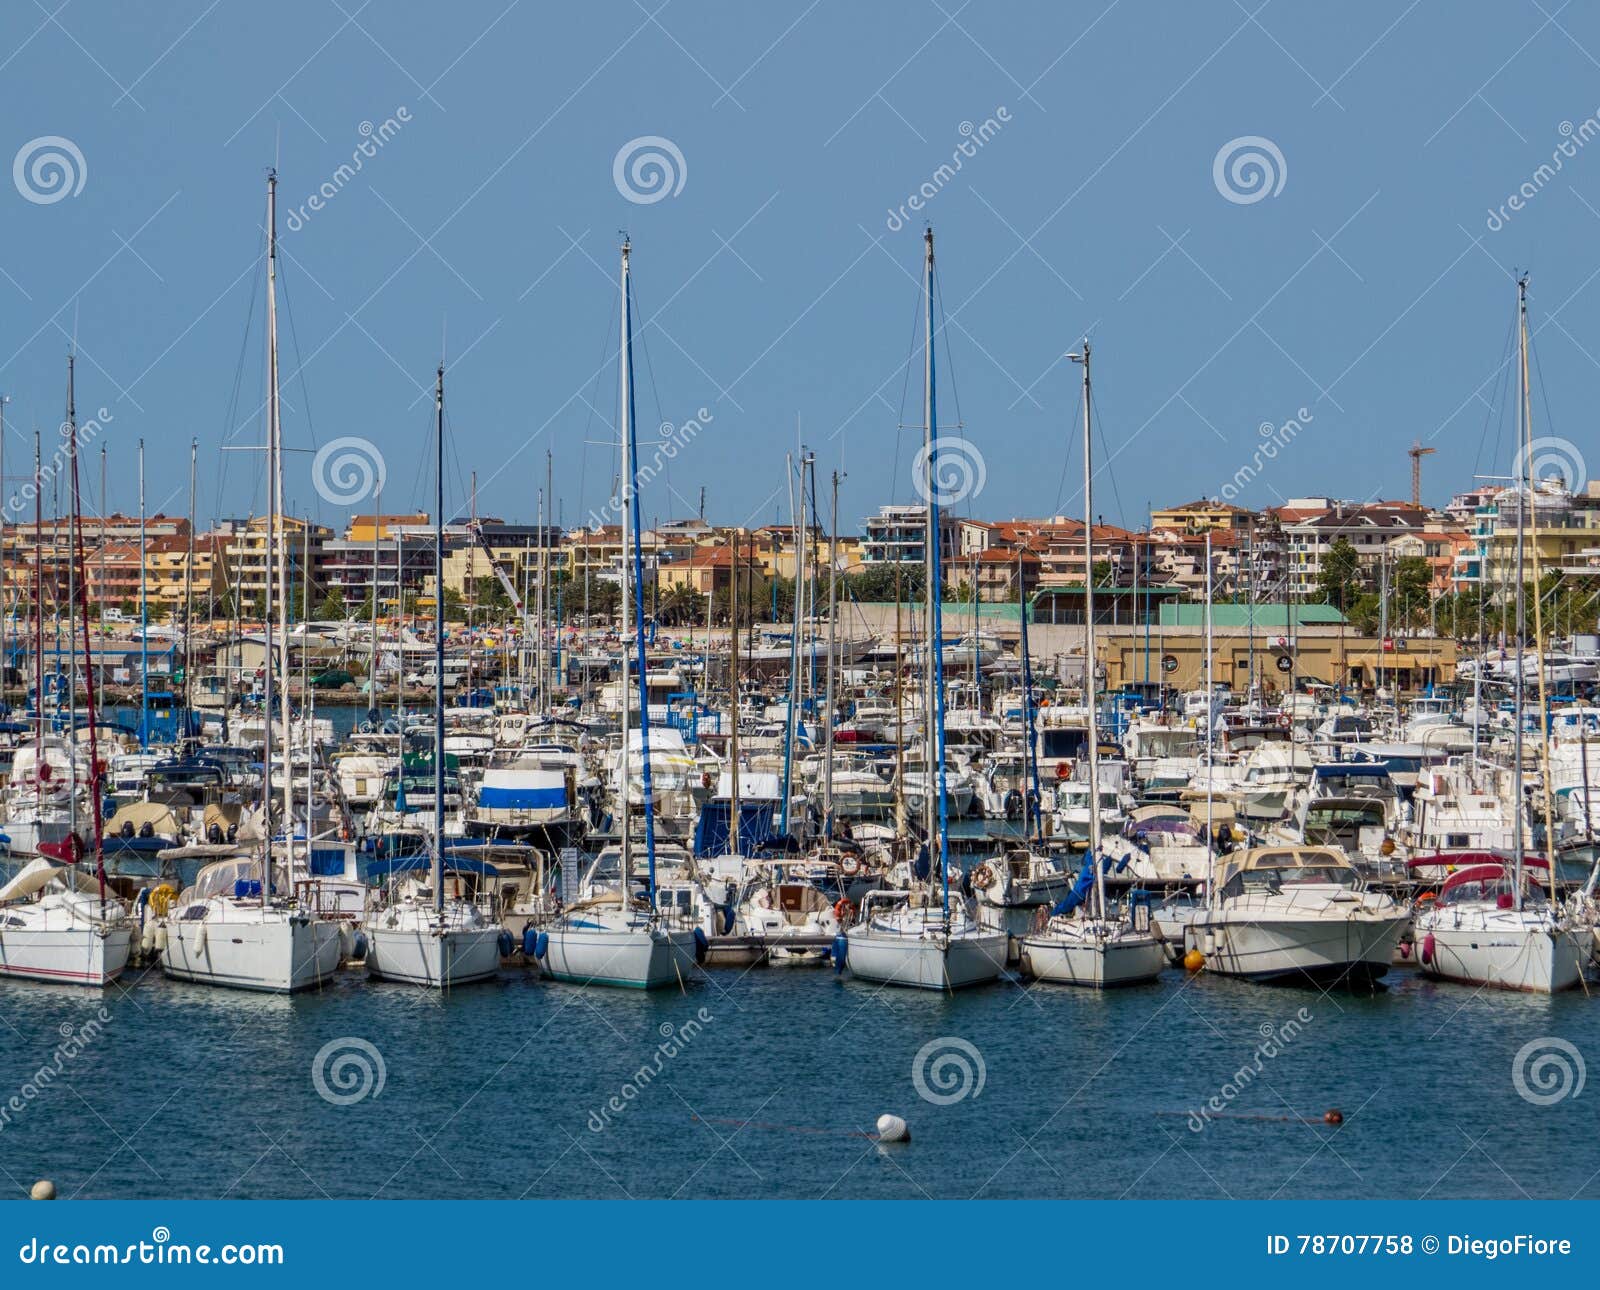 port of alghero